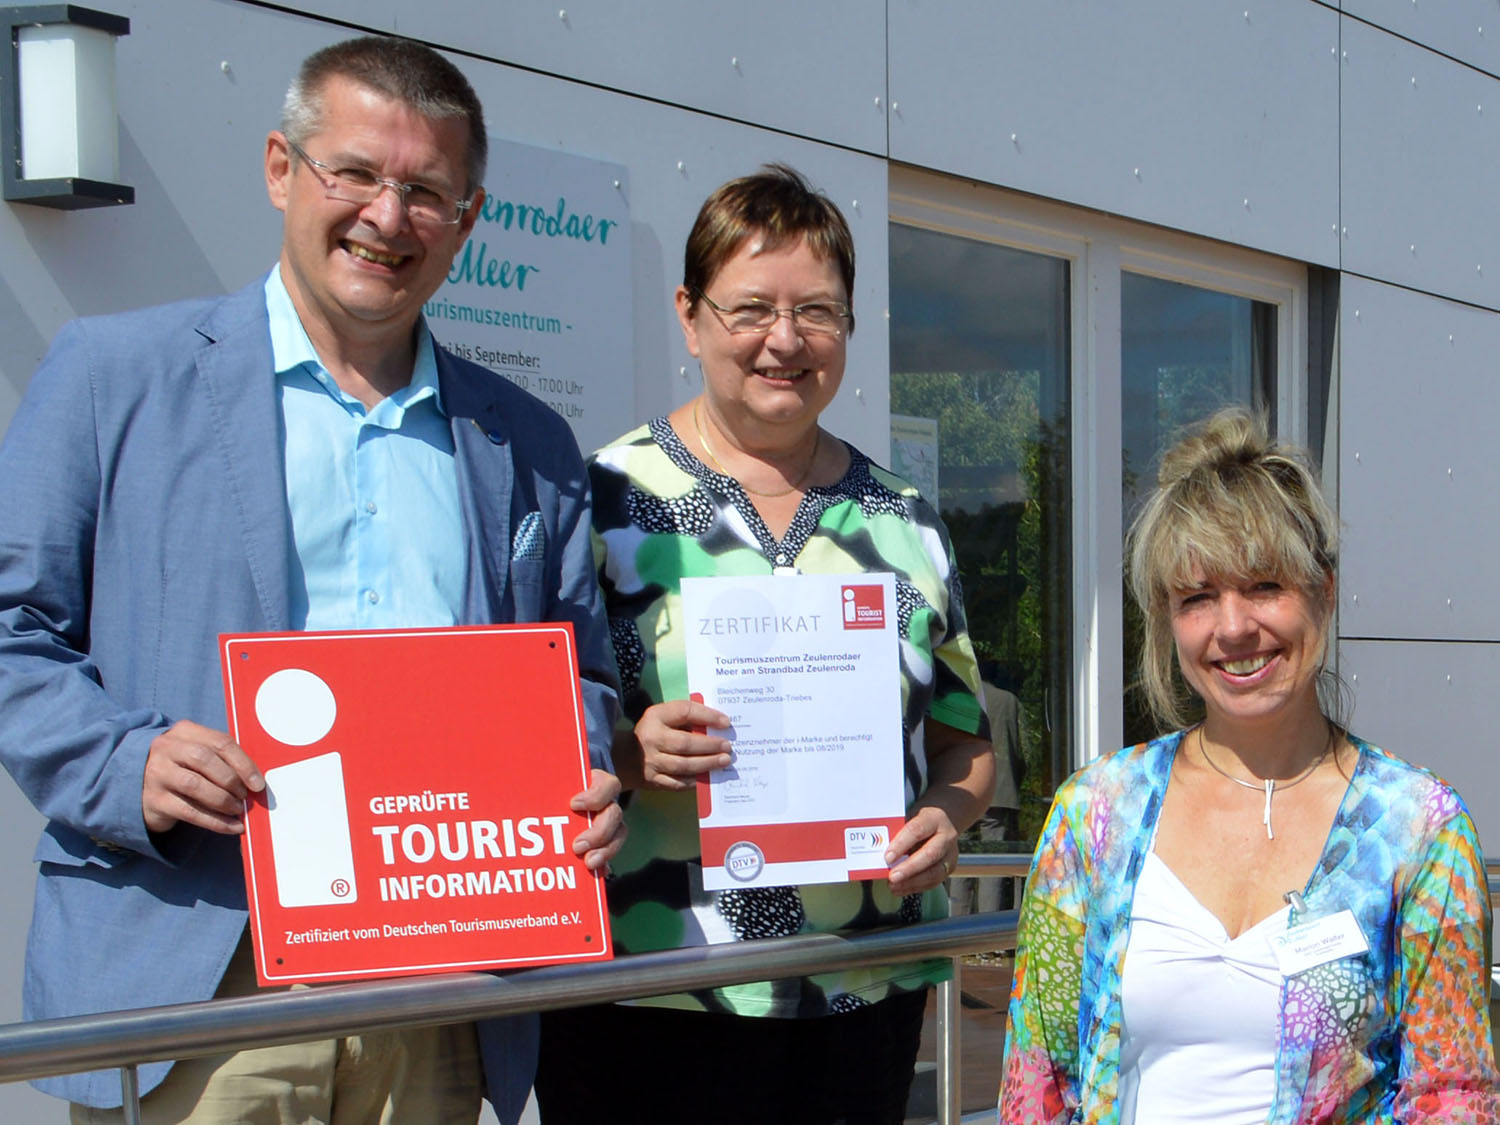 Tourismuszentrum Zeulenrodaer Meer mit "I-Marke" zertifiziert